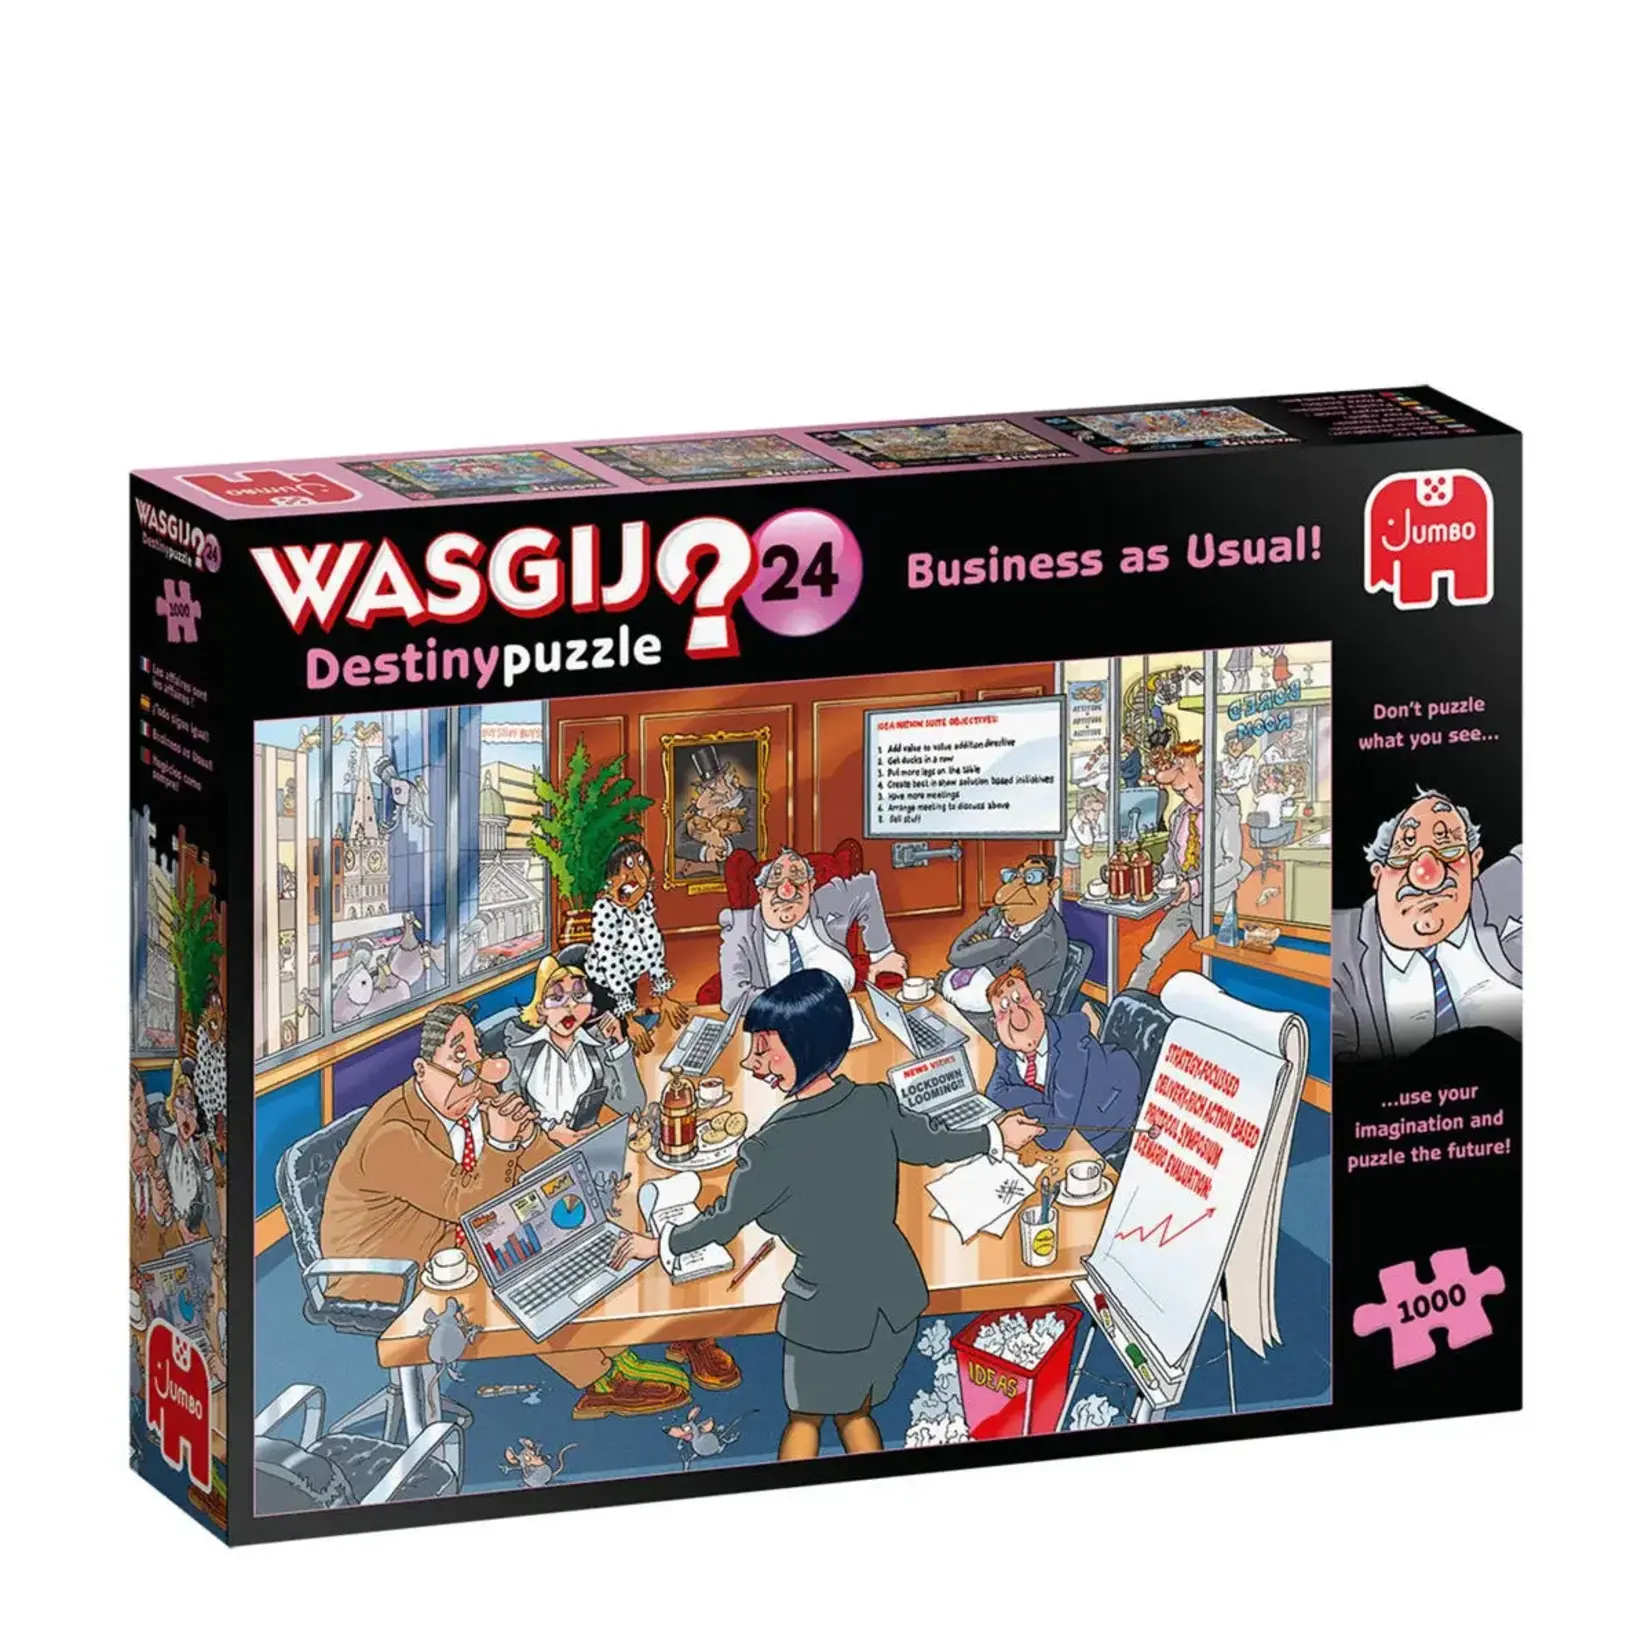 Jumbo Wasgij puzzel Destiny 24 - Business as usual! (1000 stukjes)